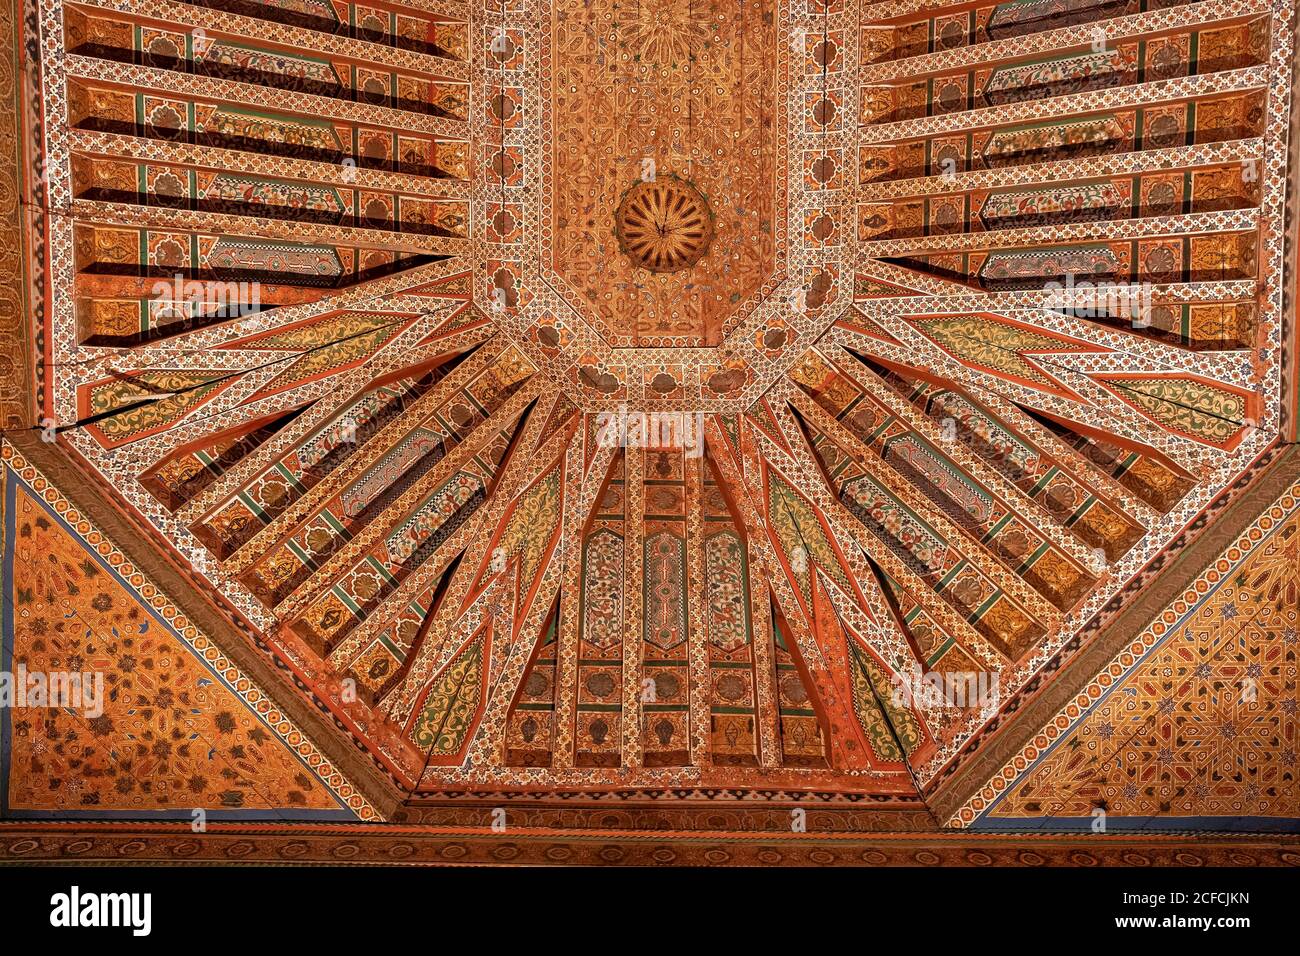 Arquitectura, Palacio de Bahía, techo de madera creativo, decorativo, Marrakech, Marruecos, islámico, árabe Foto de stock